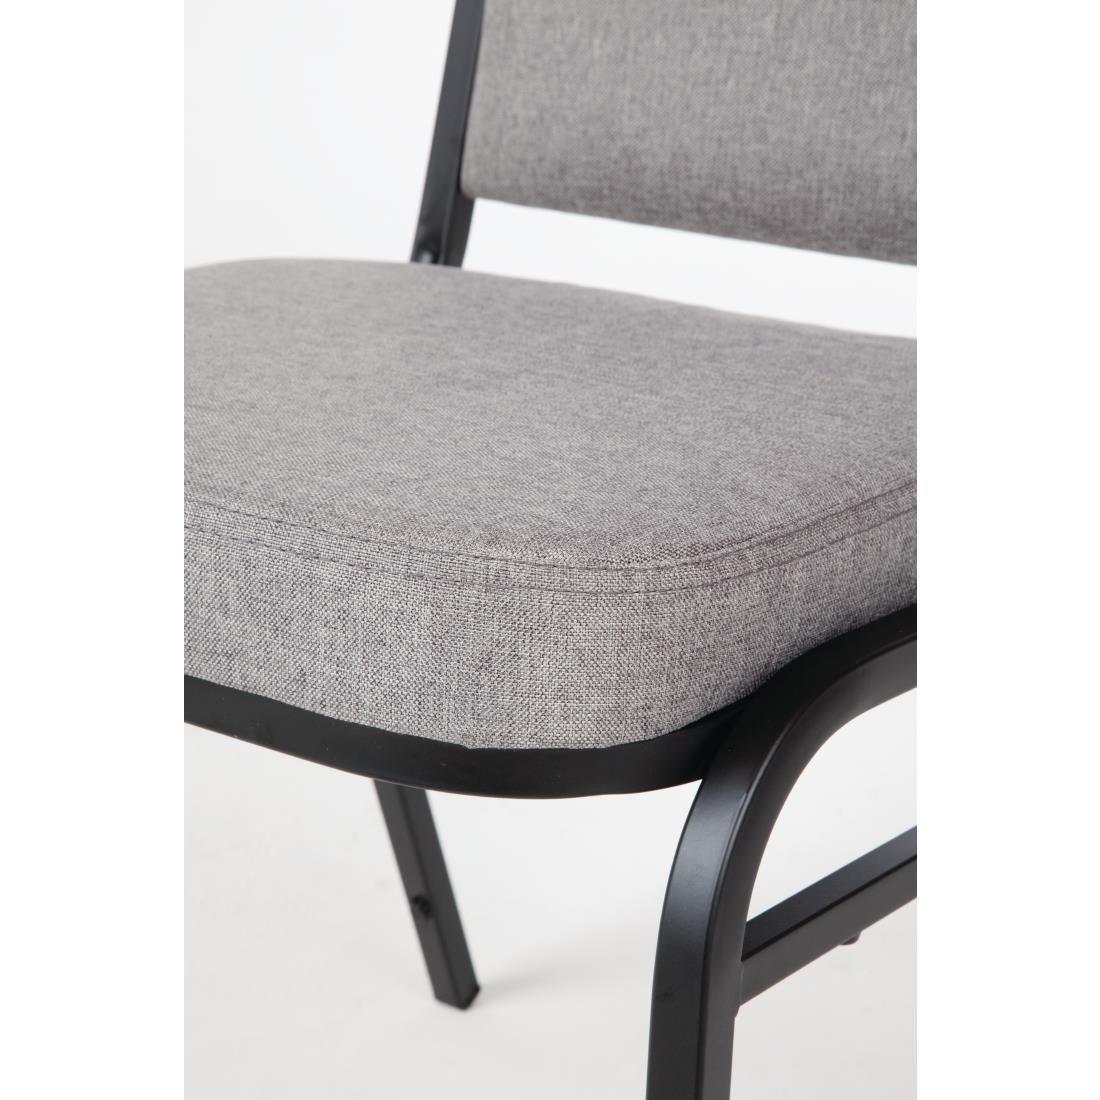 Bolero Square Back Banquet Chairs Black & Grey (Pack of 4) - DA602  - 6